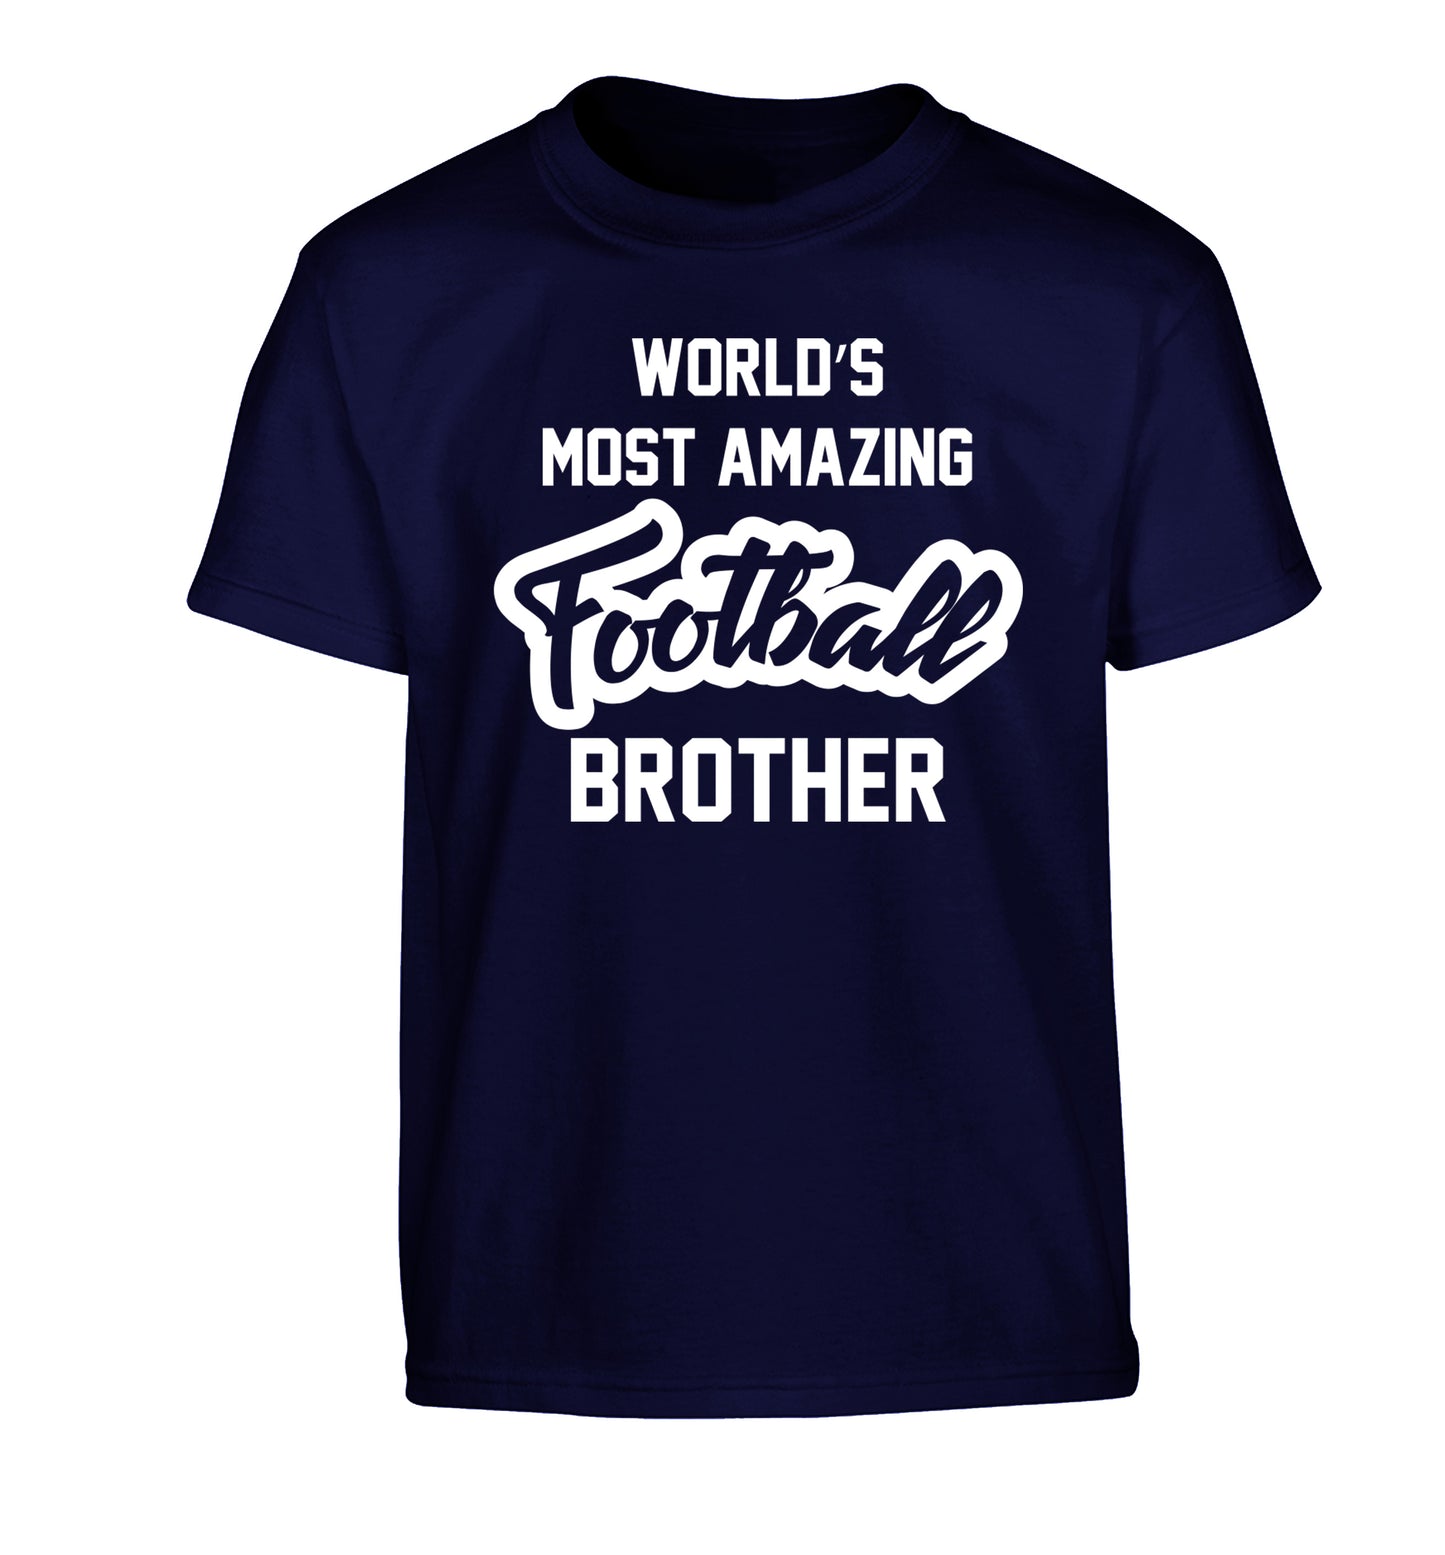 Worlds most amazing football brother Children's navy Tshirt 12-14 Years